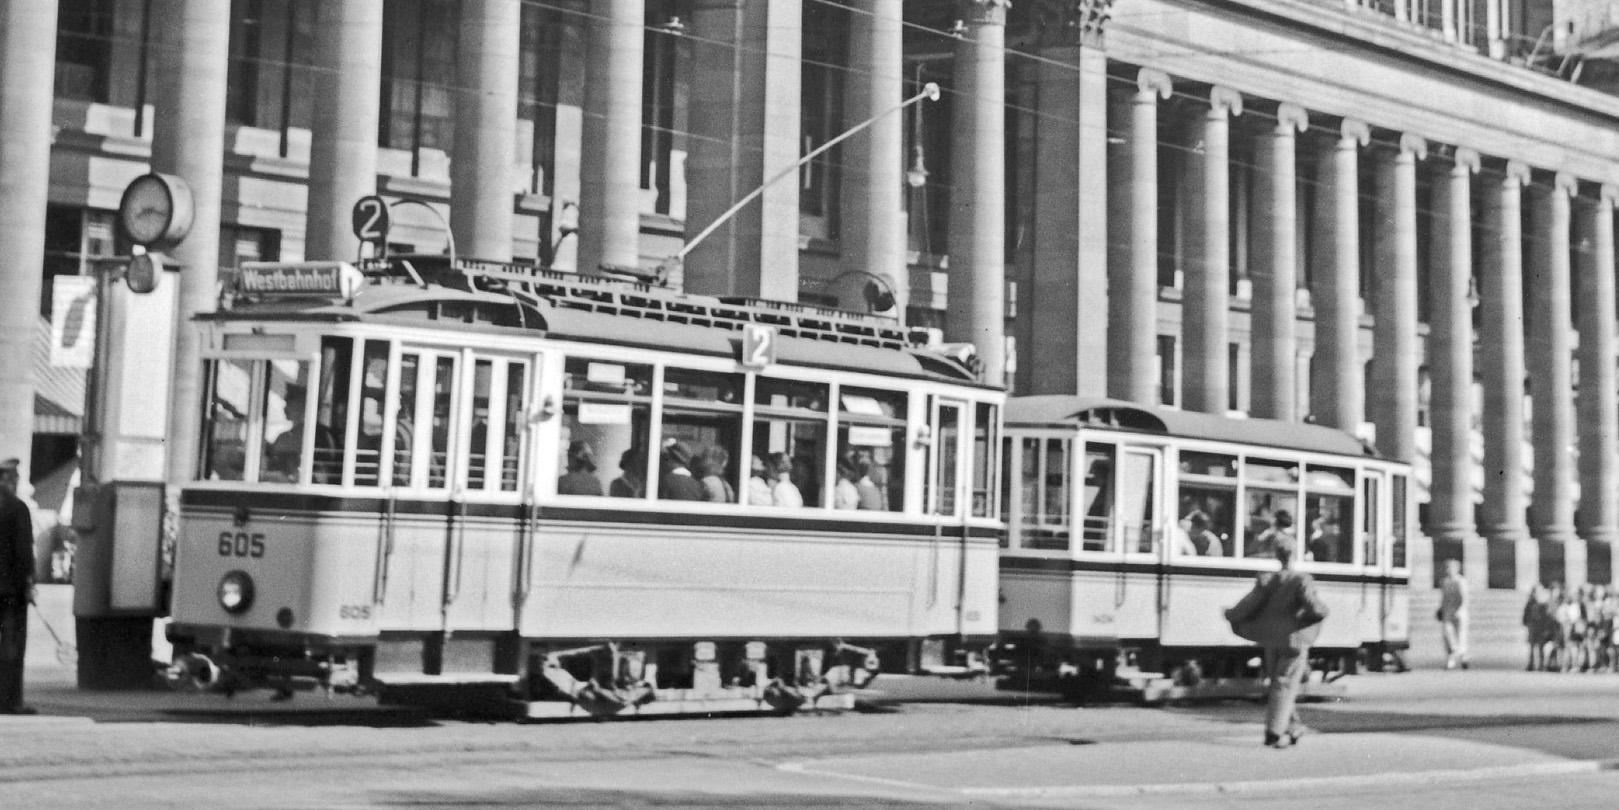 Tram line no.2 front of Koenigsbau palace, Stuttgart Germany 1935, Printed Later - Photograph by Karl Heinrich Lämmel